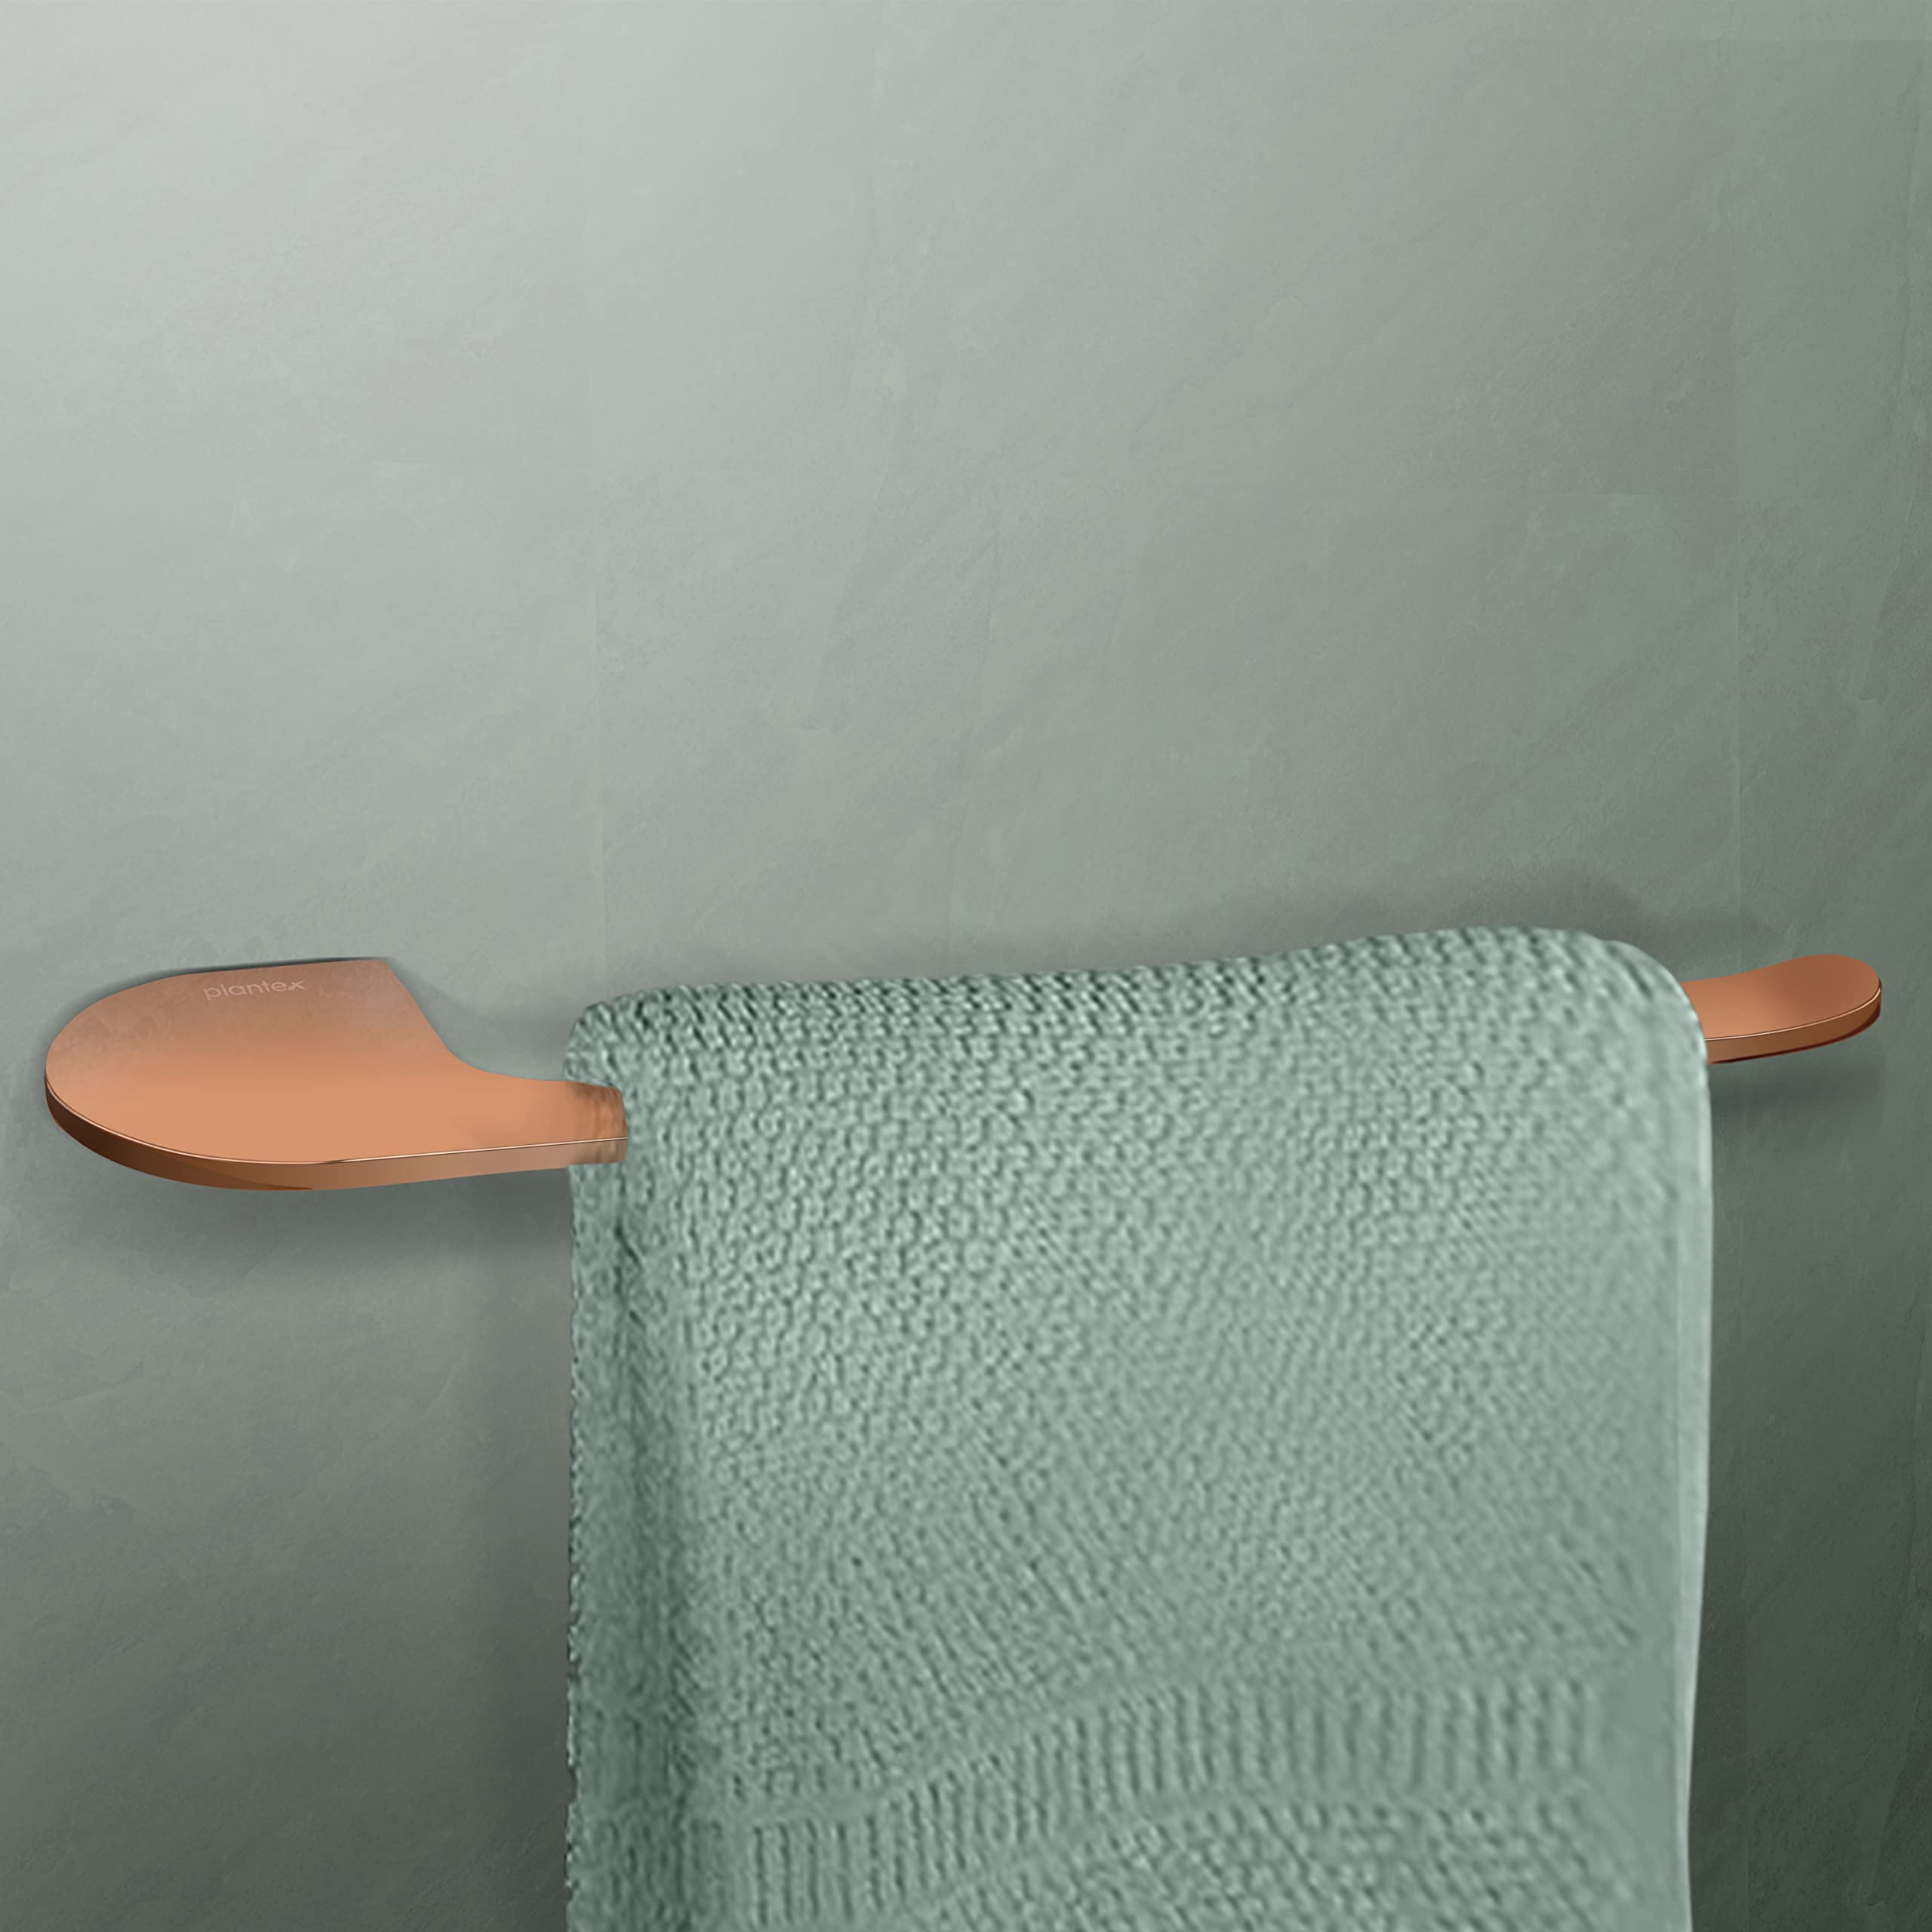 Plantex Fully Brass Smero Napkin Ring/Towel Ring/Towel Hanger/Napkin Holder/Bathroom Accessories - Rose Gold (SM-2233)